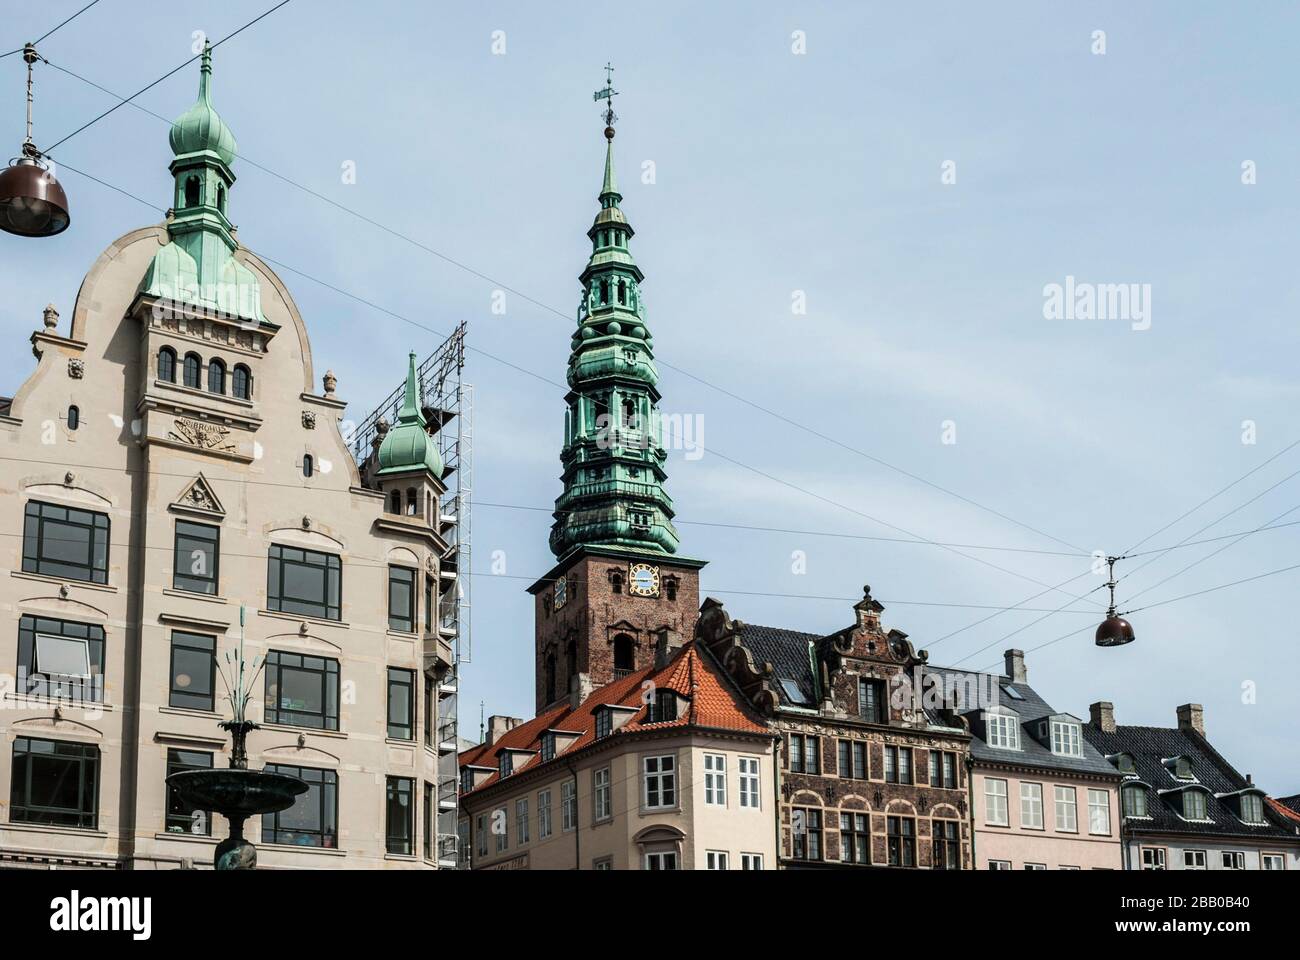 Amager Square, architecture. Copenhagen, Denmark, Europe. Stock Photo